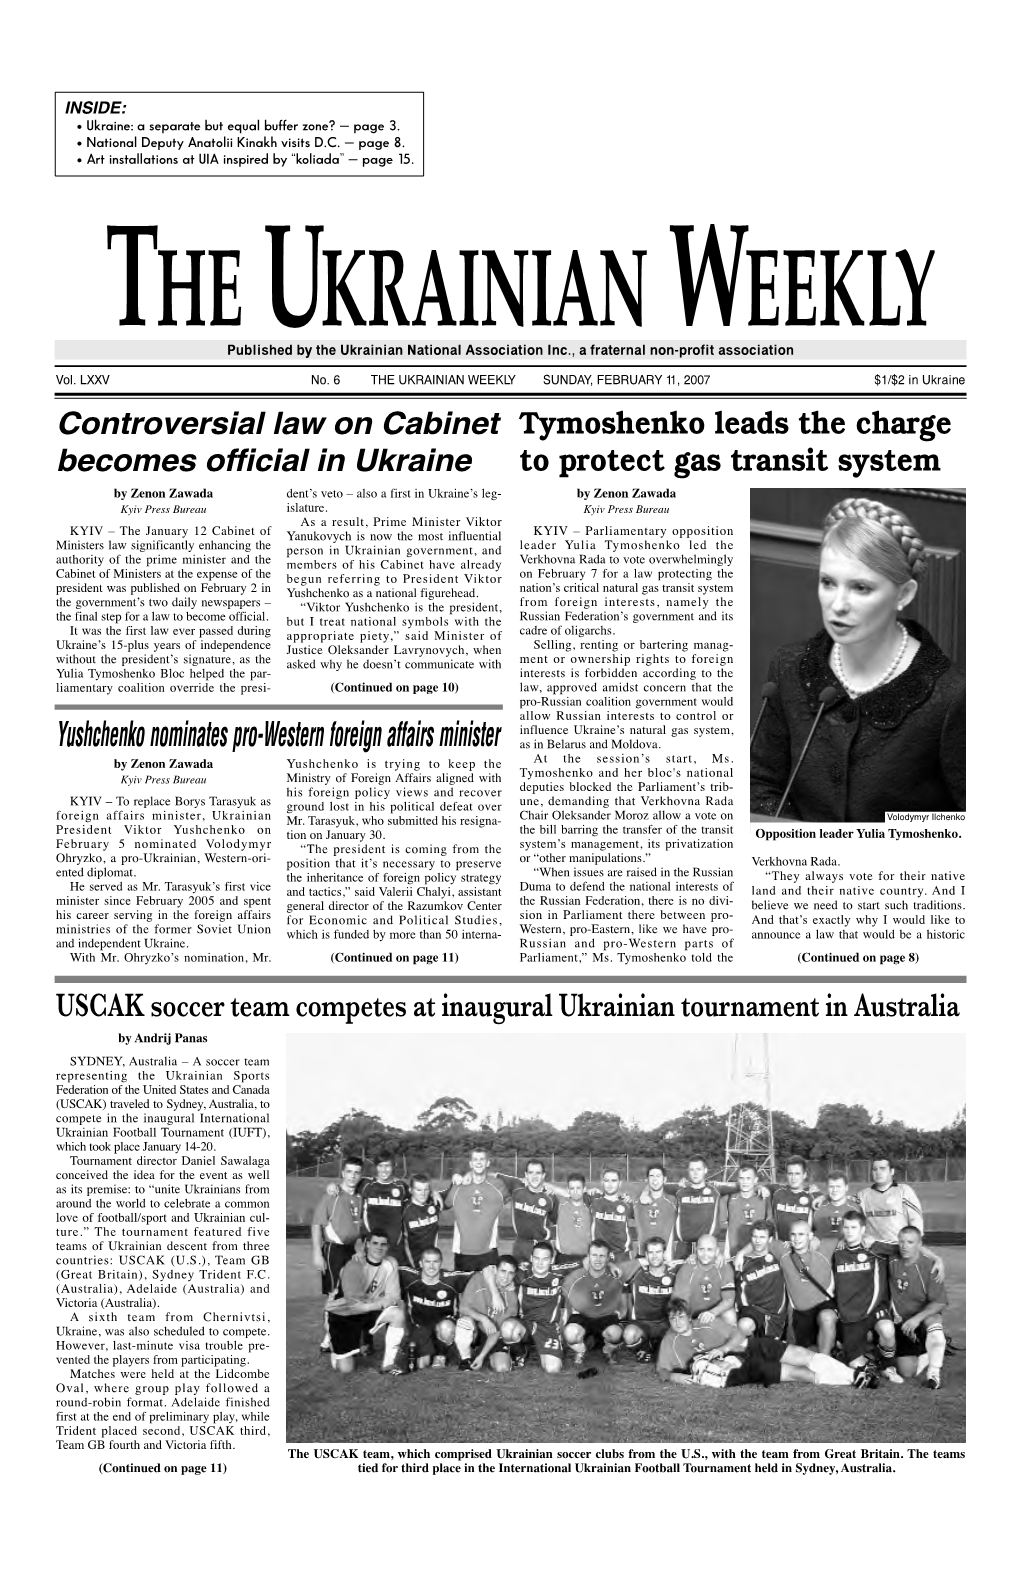 The Ukrainian Weekly 2007, No.6